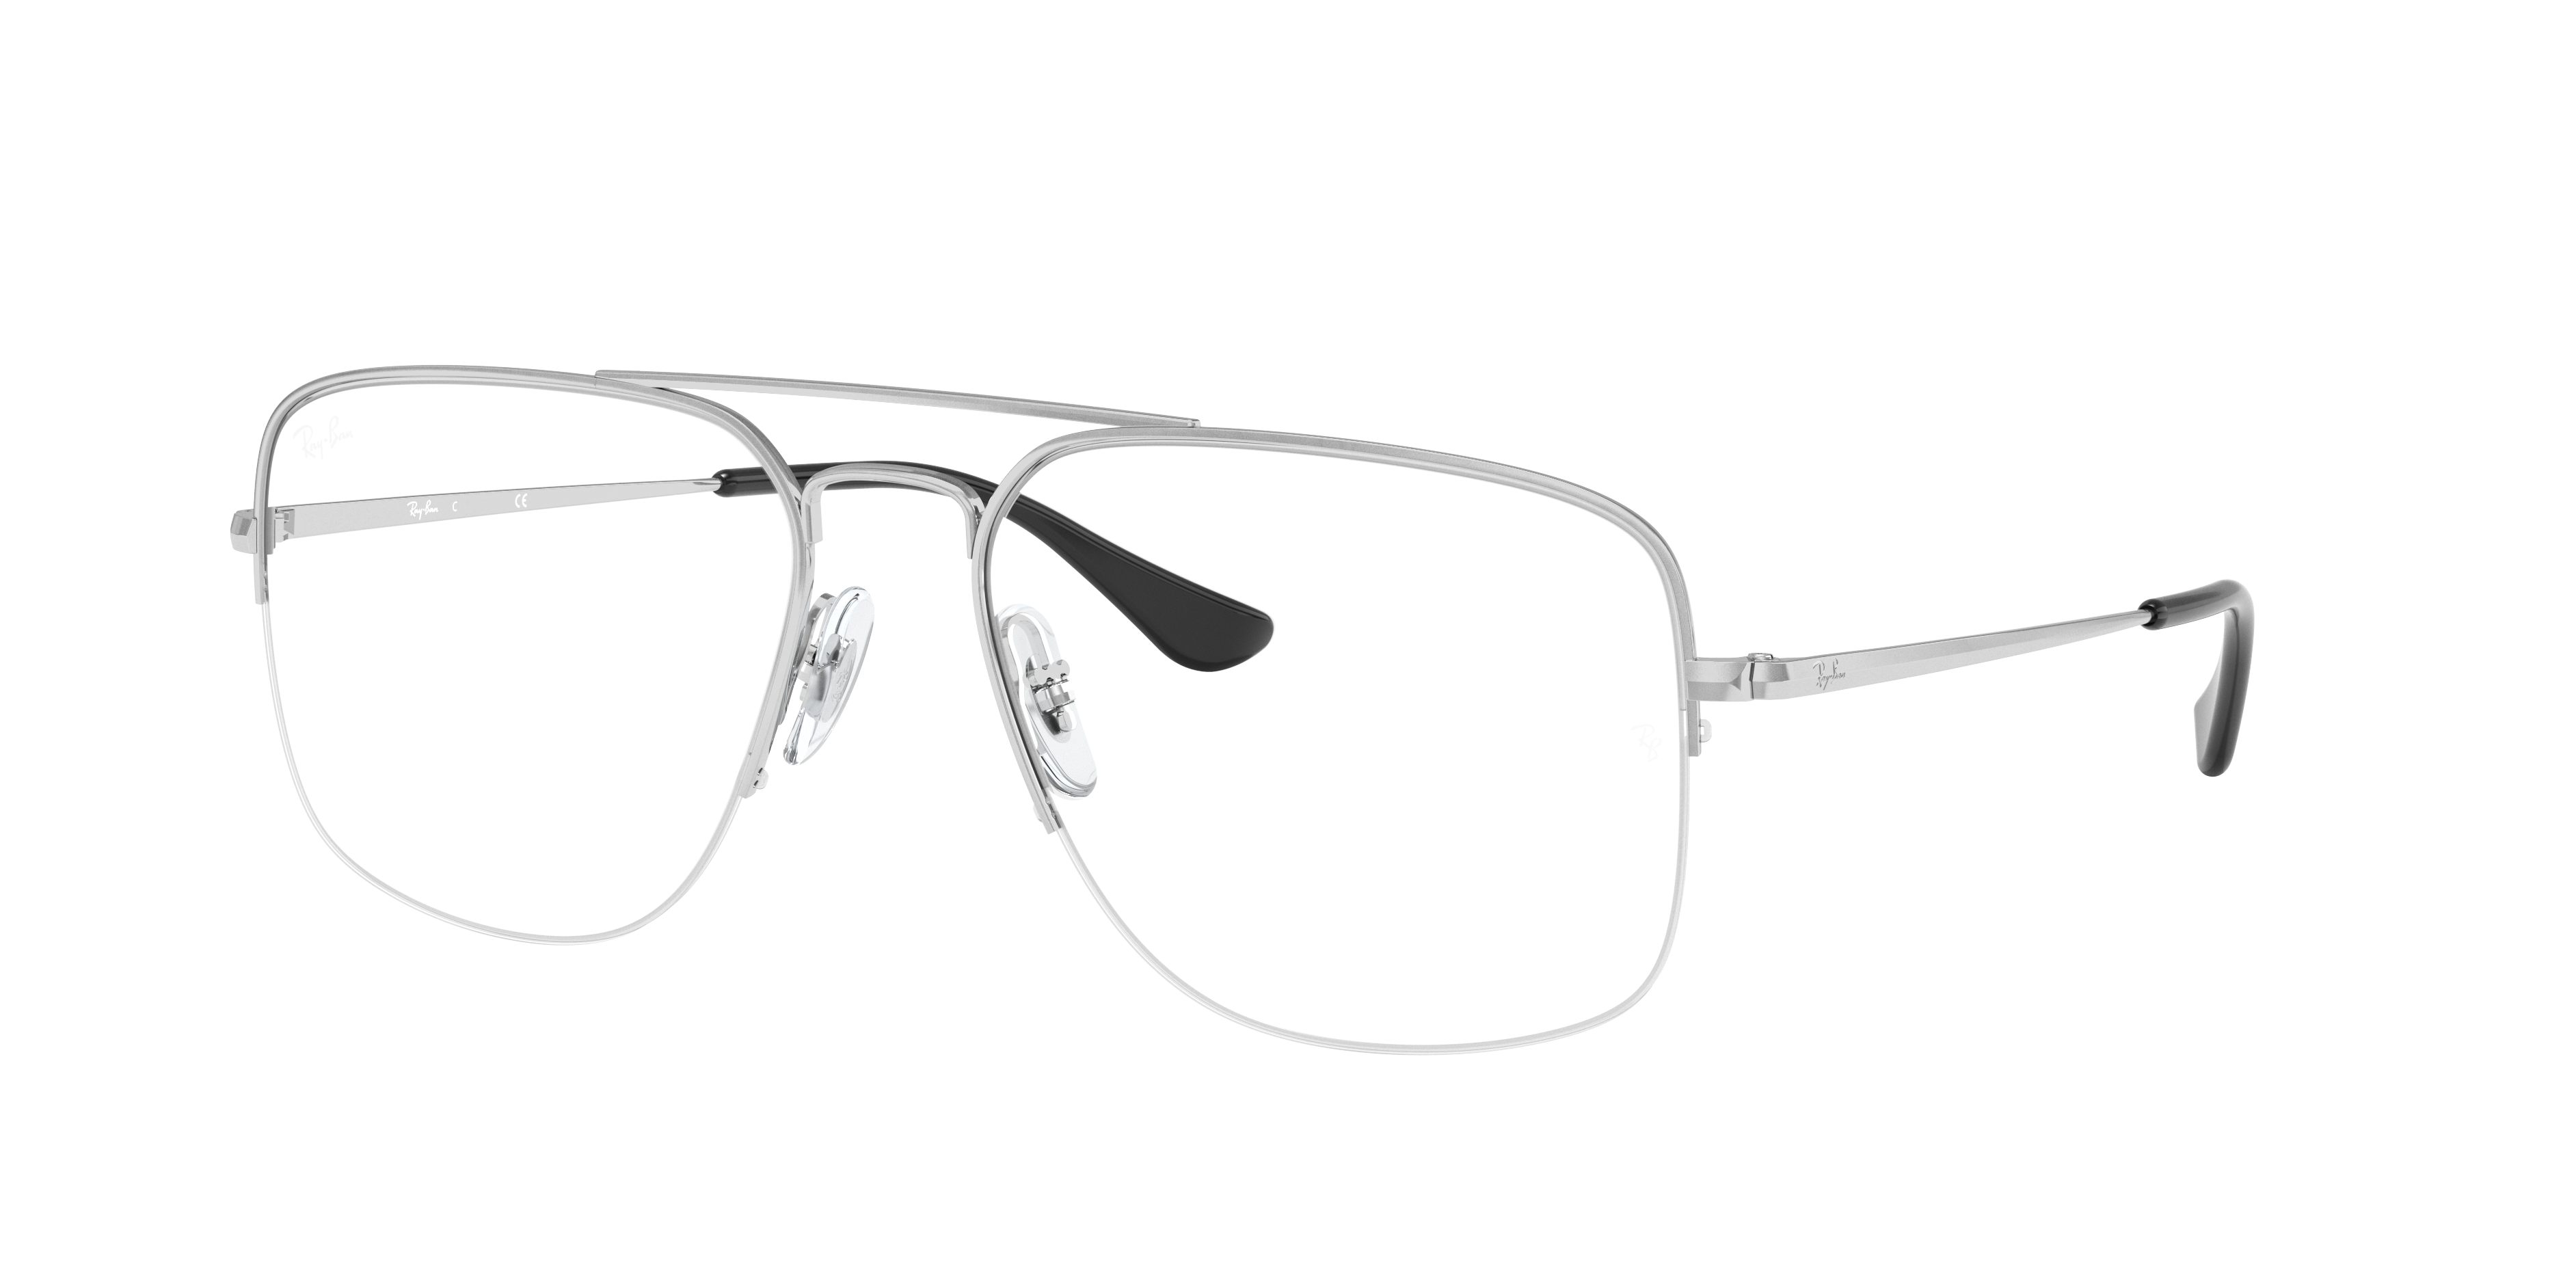 General Gaze Optics Eyeglasses with Silver Frame | Ray-Ban®